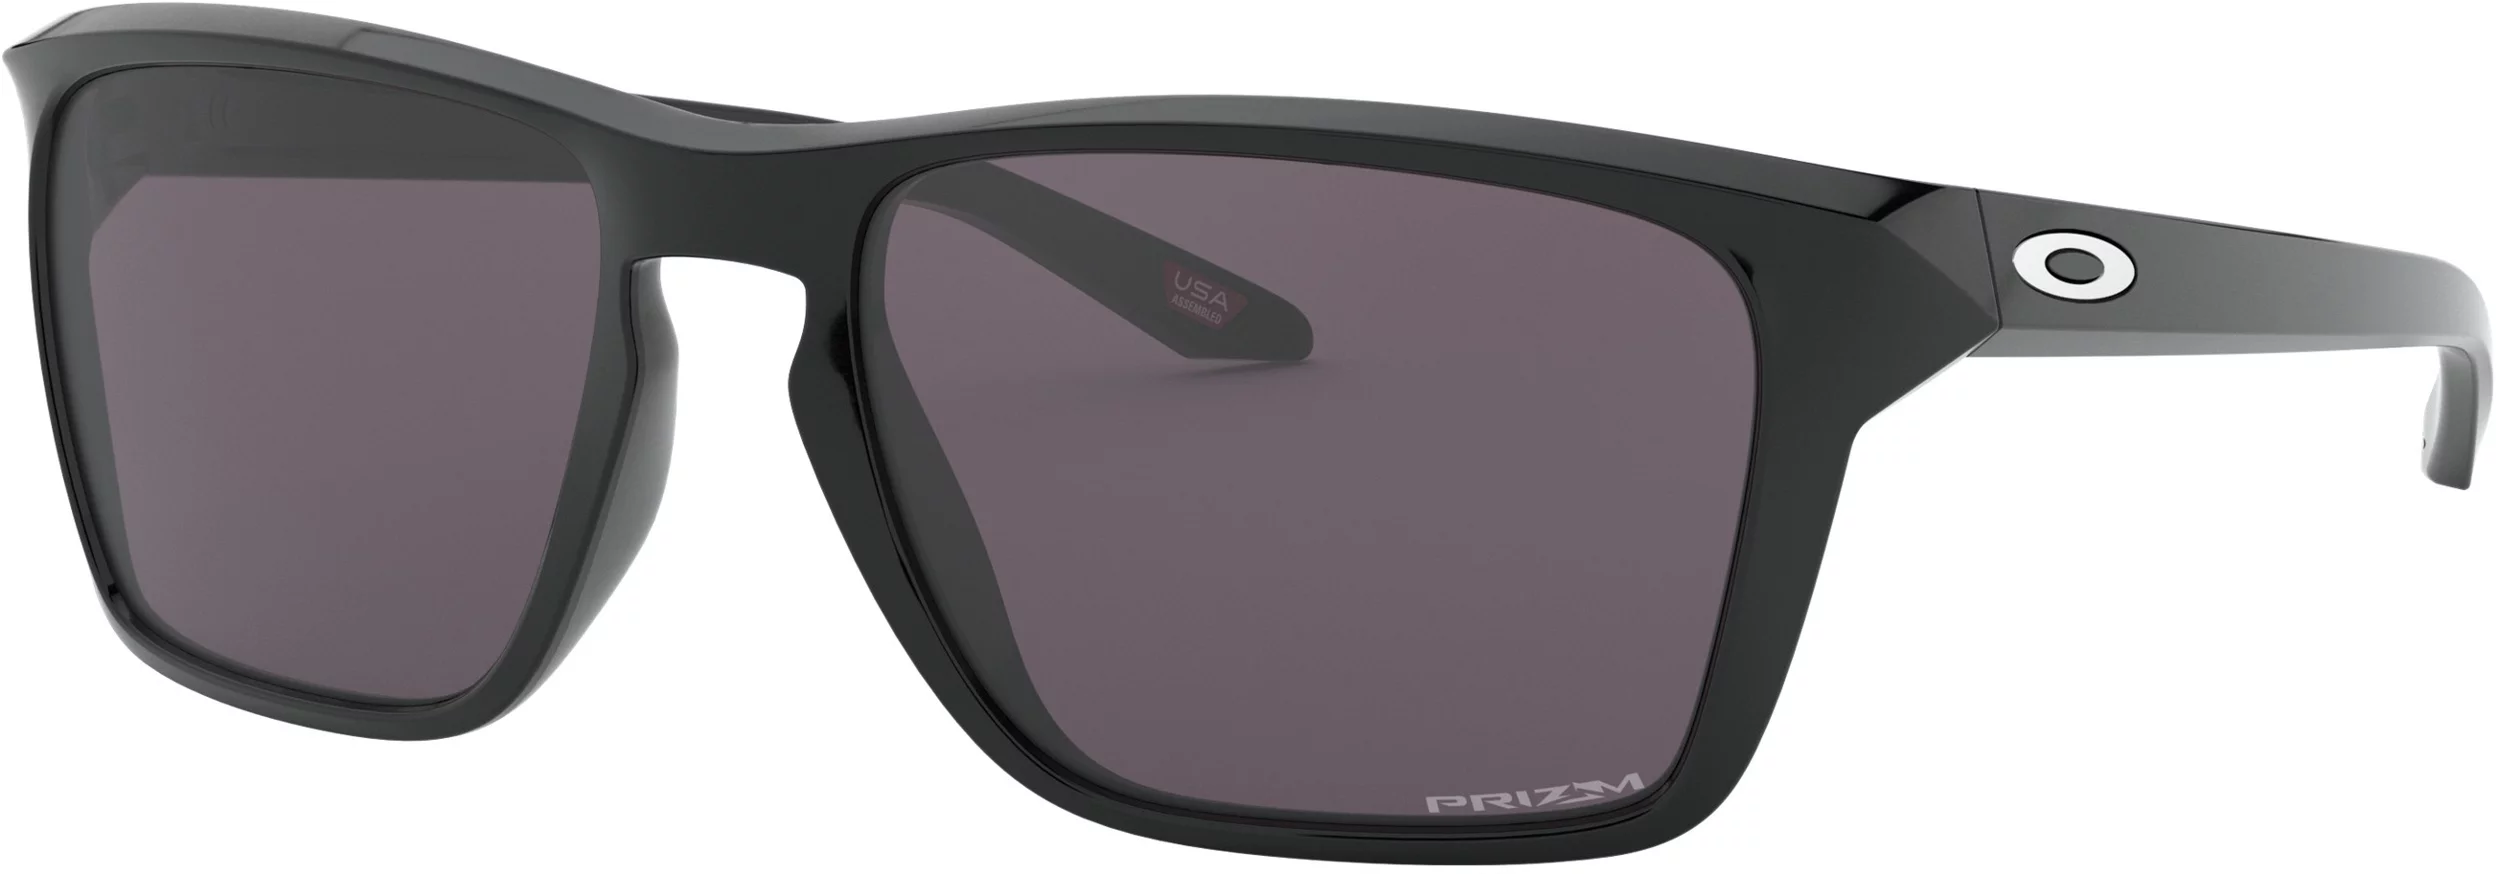 Sylas Sunglasses - polished black/prizm grey lens - Free Shipping | Tactics